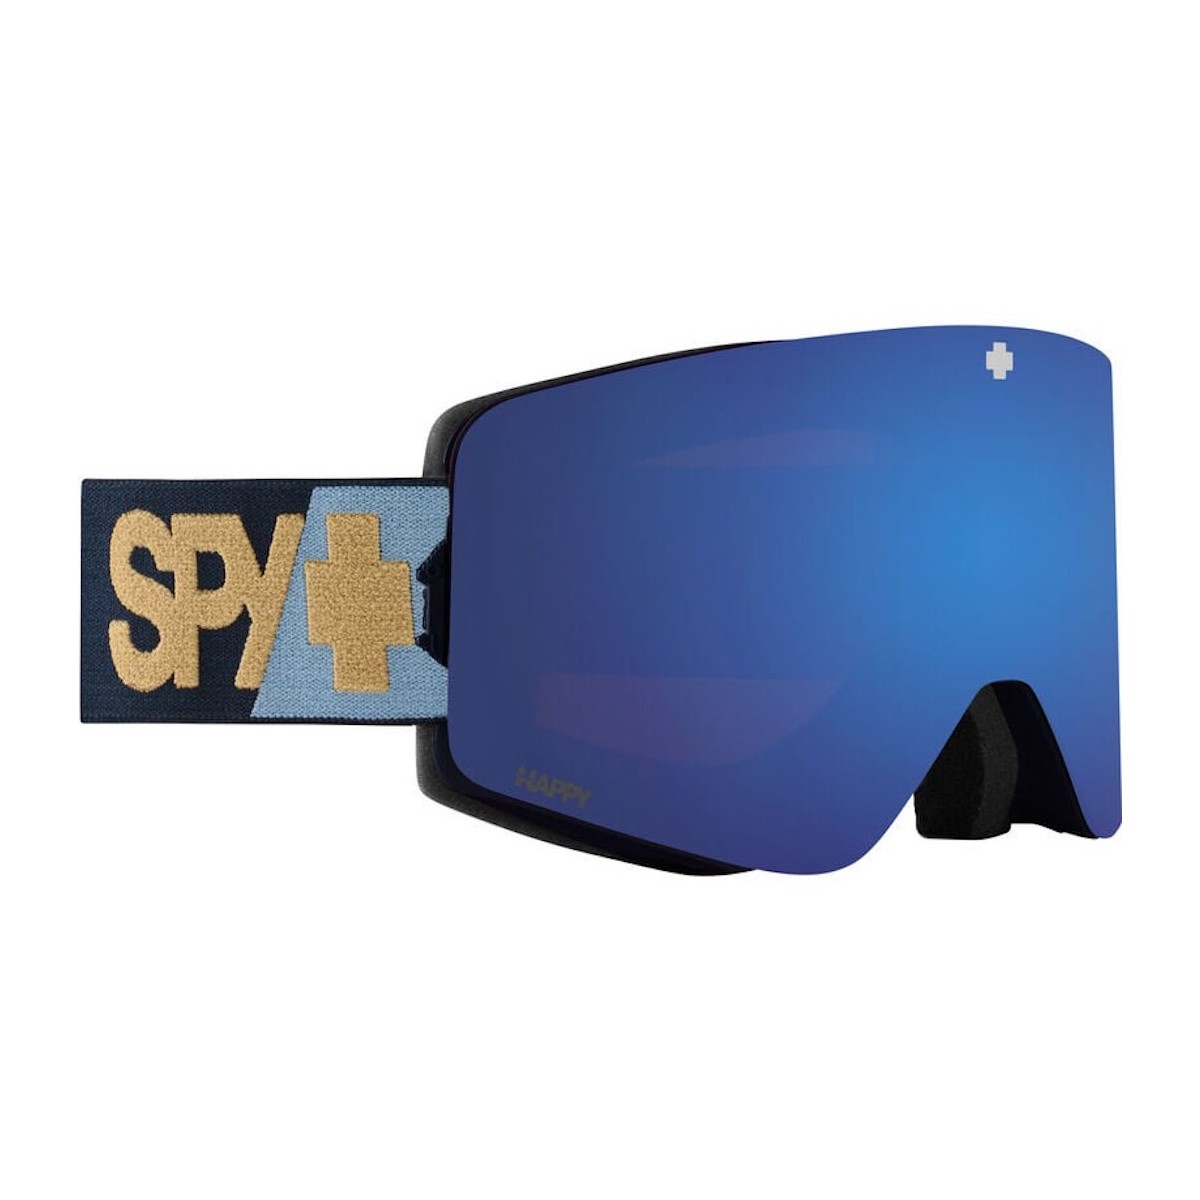 SPY MARAUDER SE SNOW goggles - dark blue